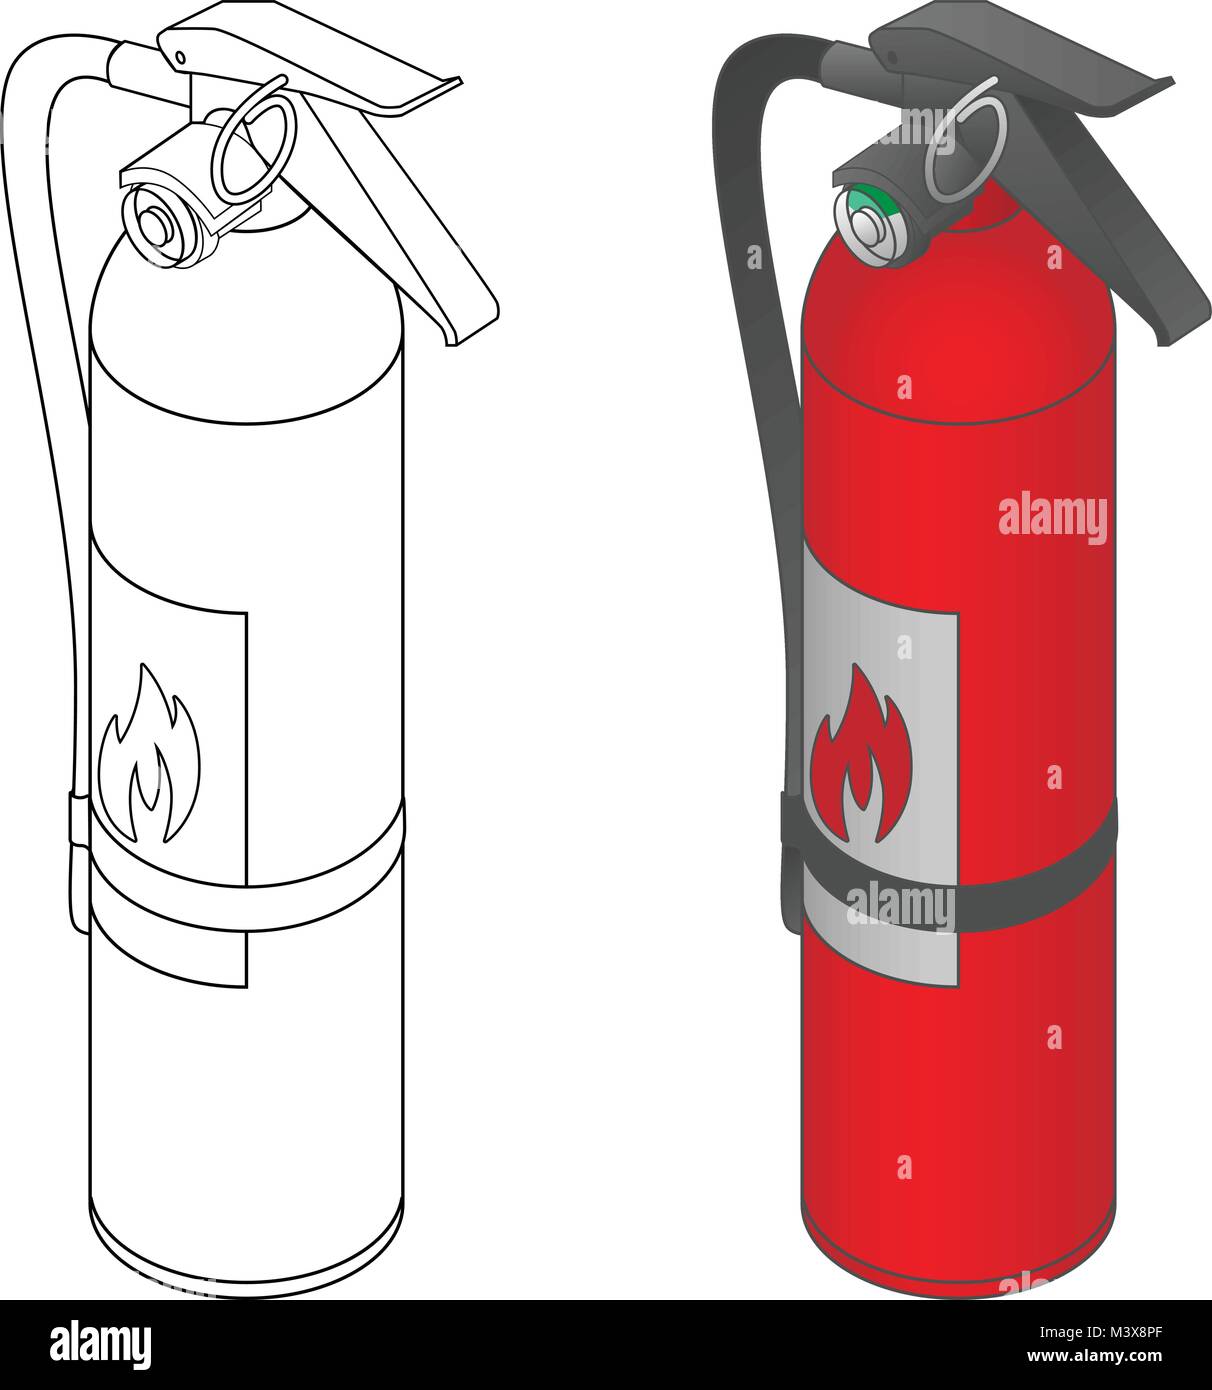 Feuerwehrschlauch notfall ausrüstung Stock-Vektorgrafiken kaufen